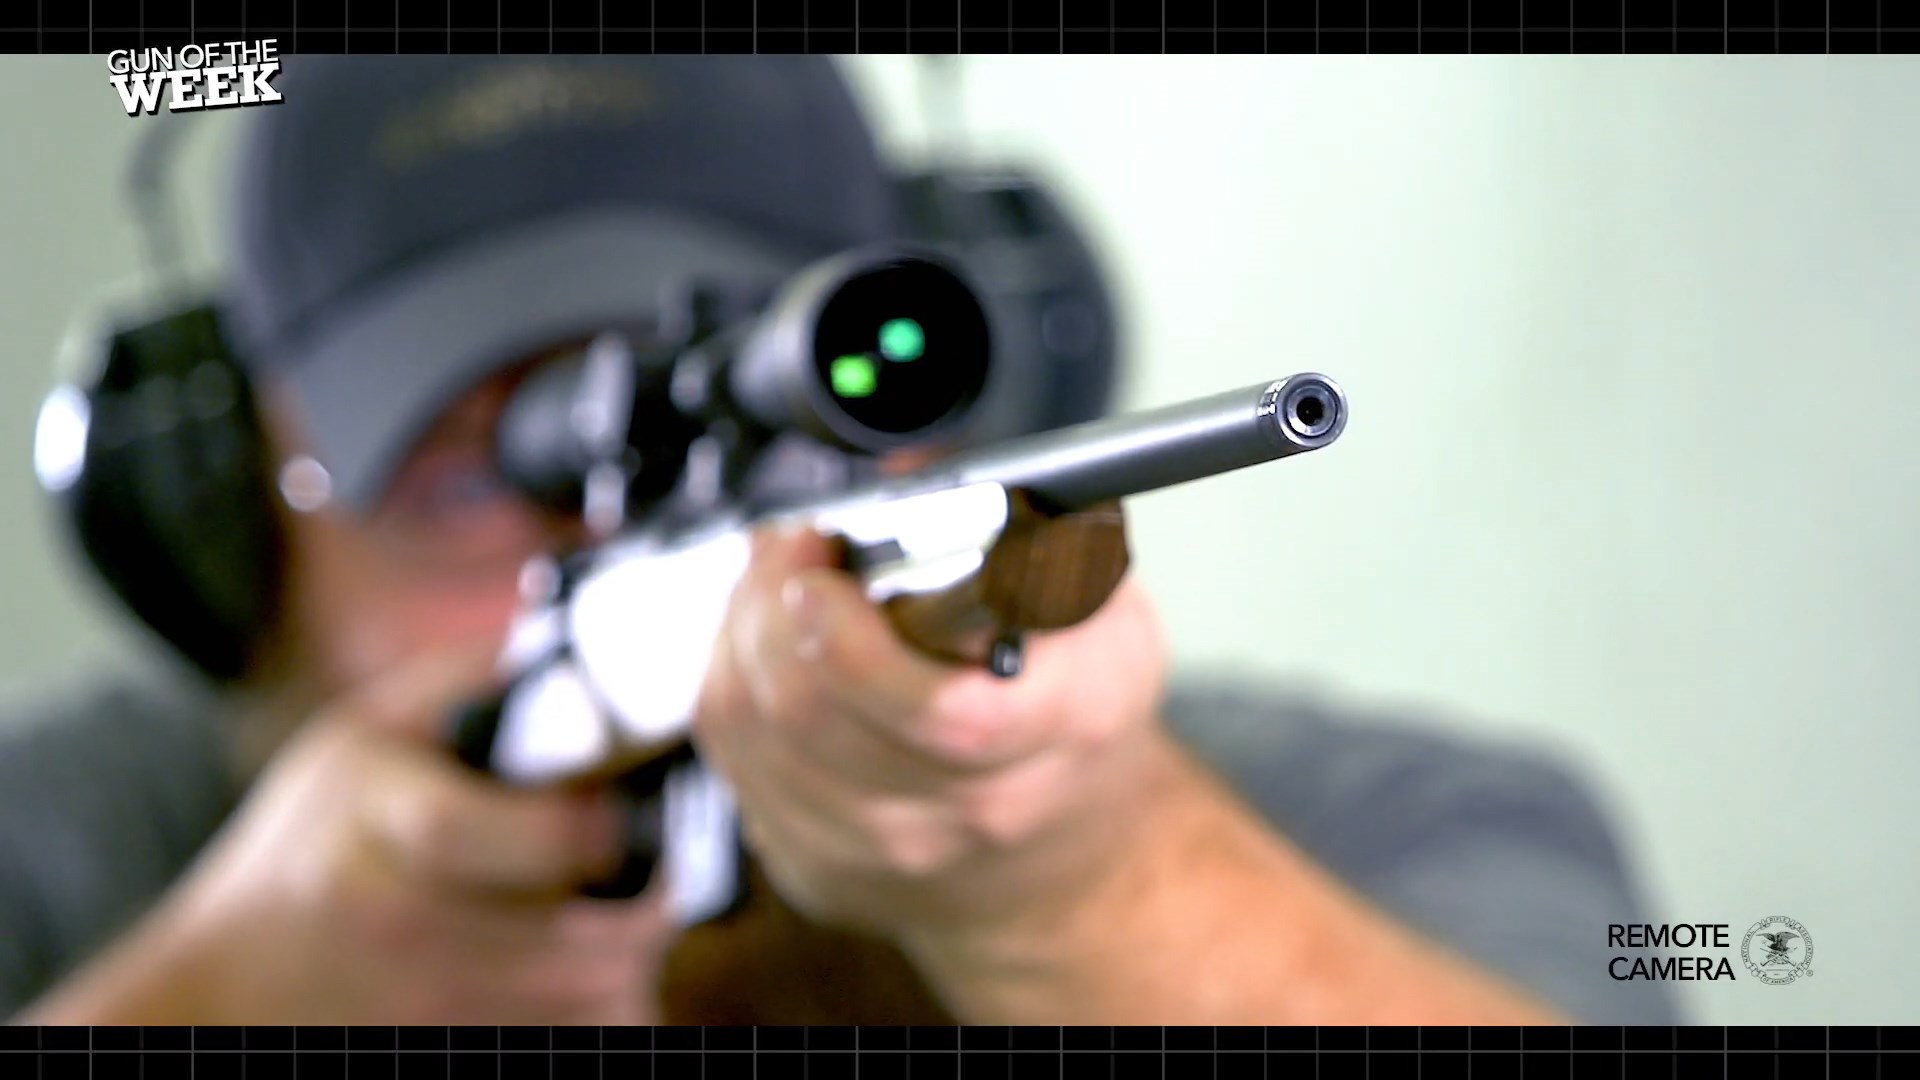 Savage 93 Minimalist bolt-action rifle on shooting range man ear protection ballcap gun indoors remote camera gun of the week text